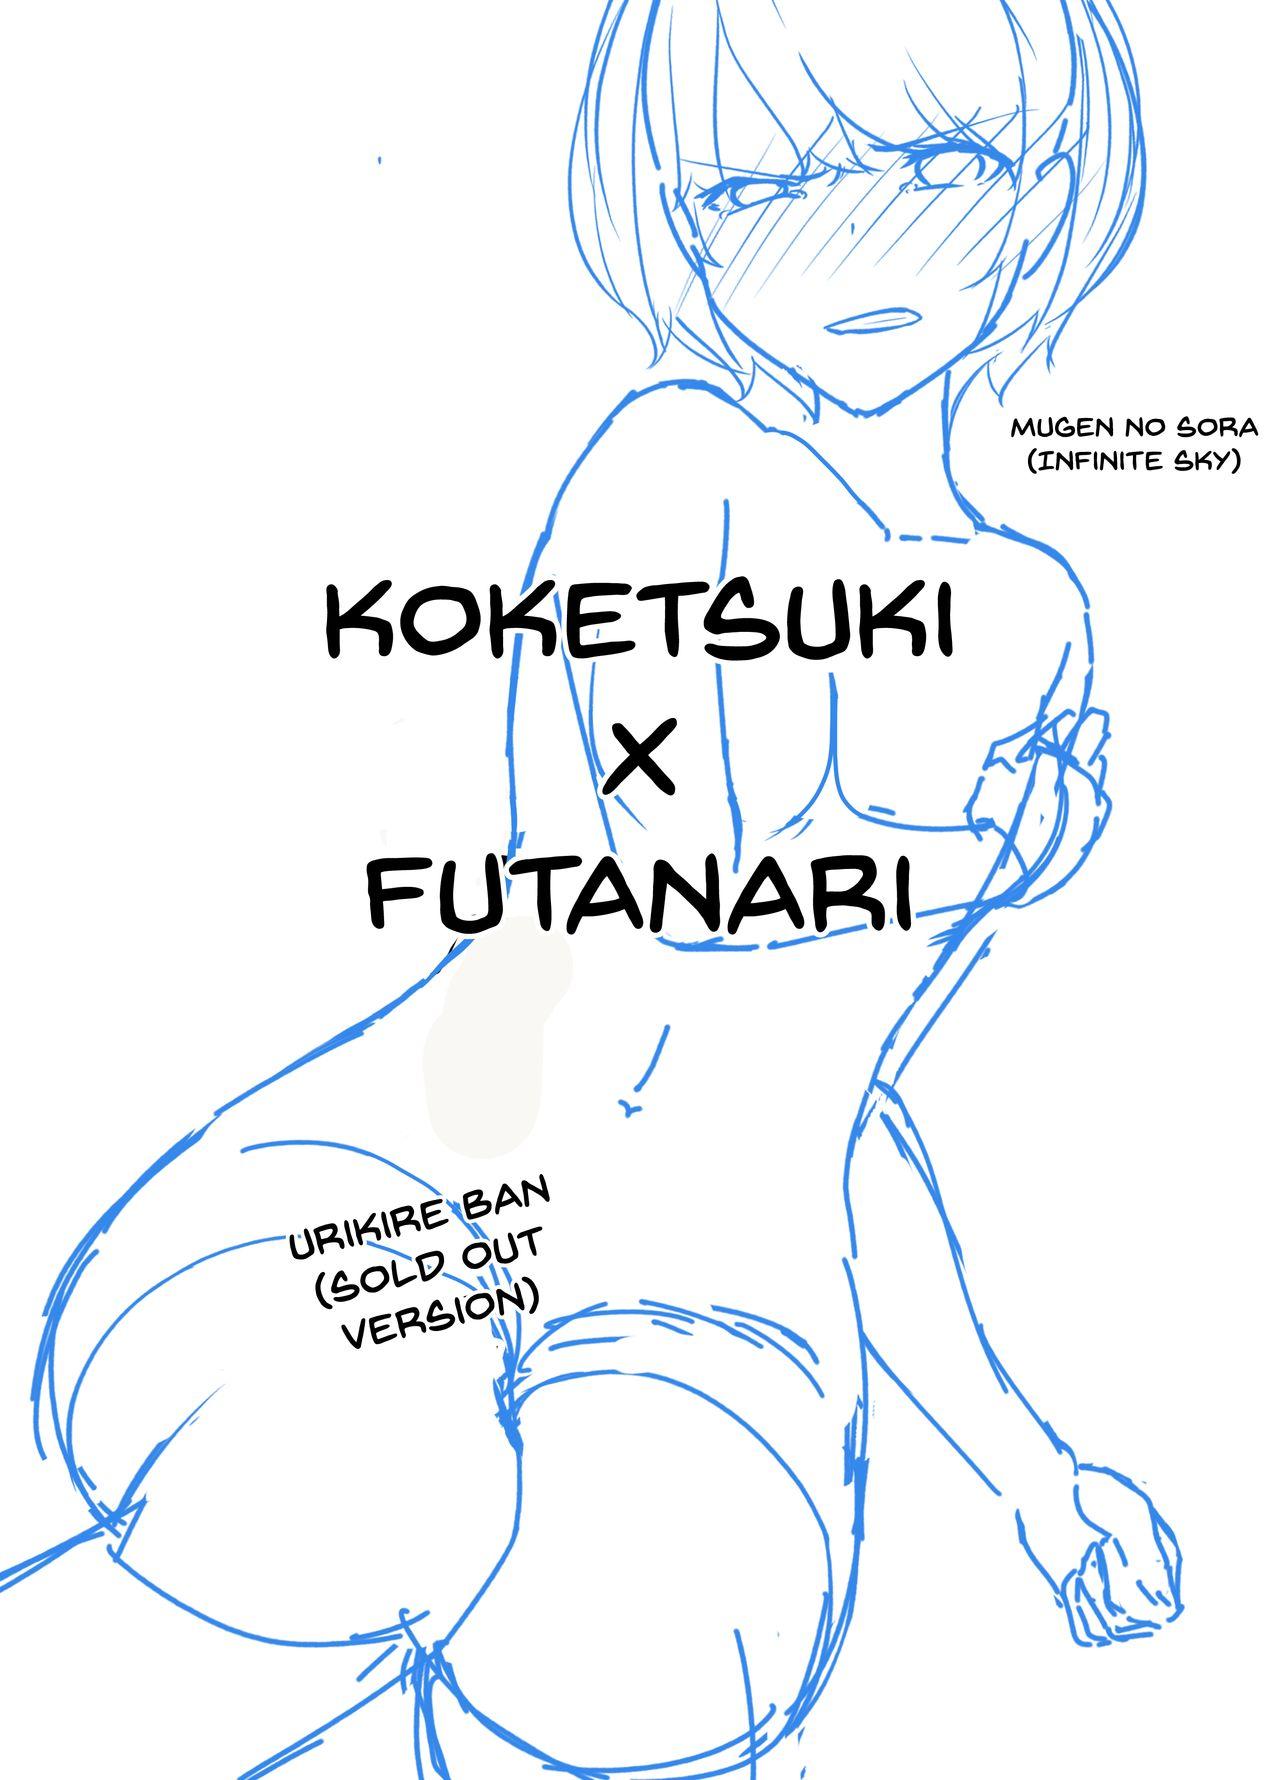 Koketsuki x Futanari 4